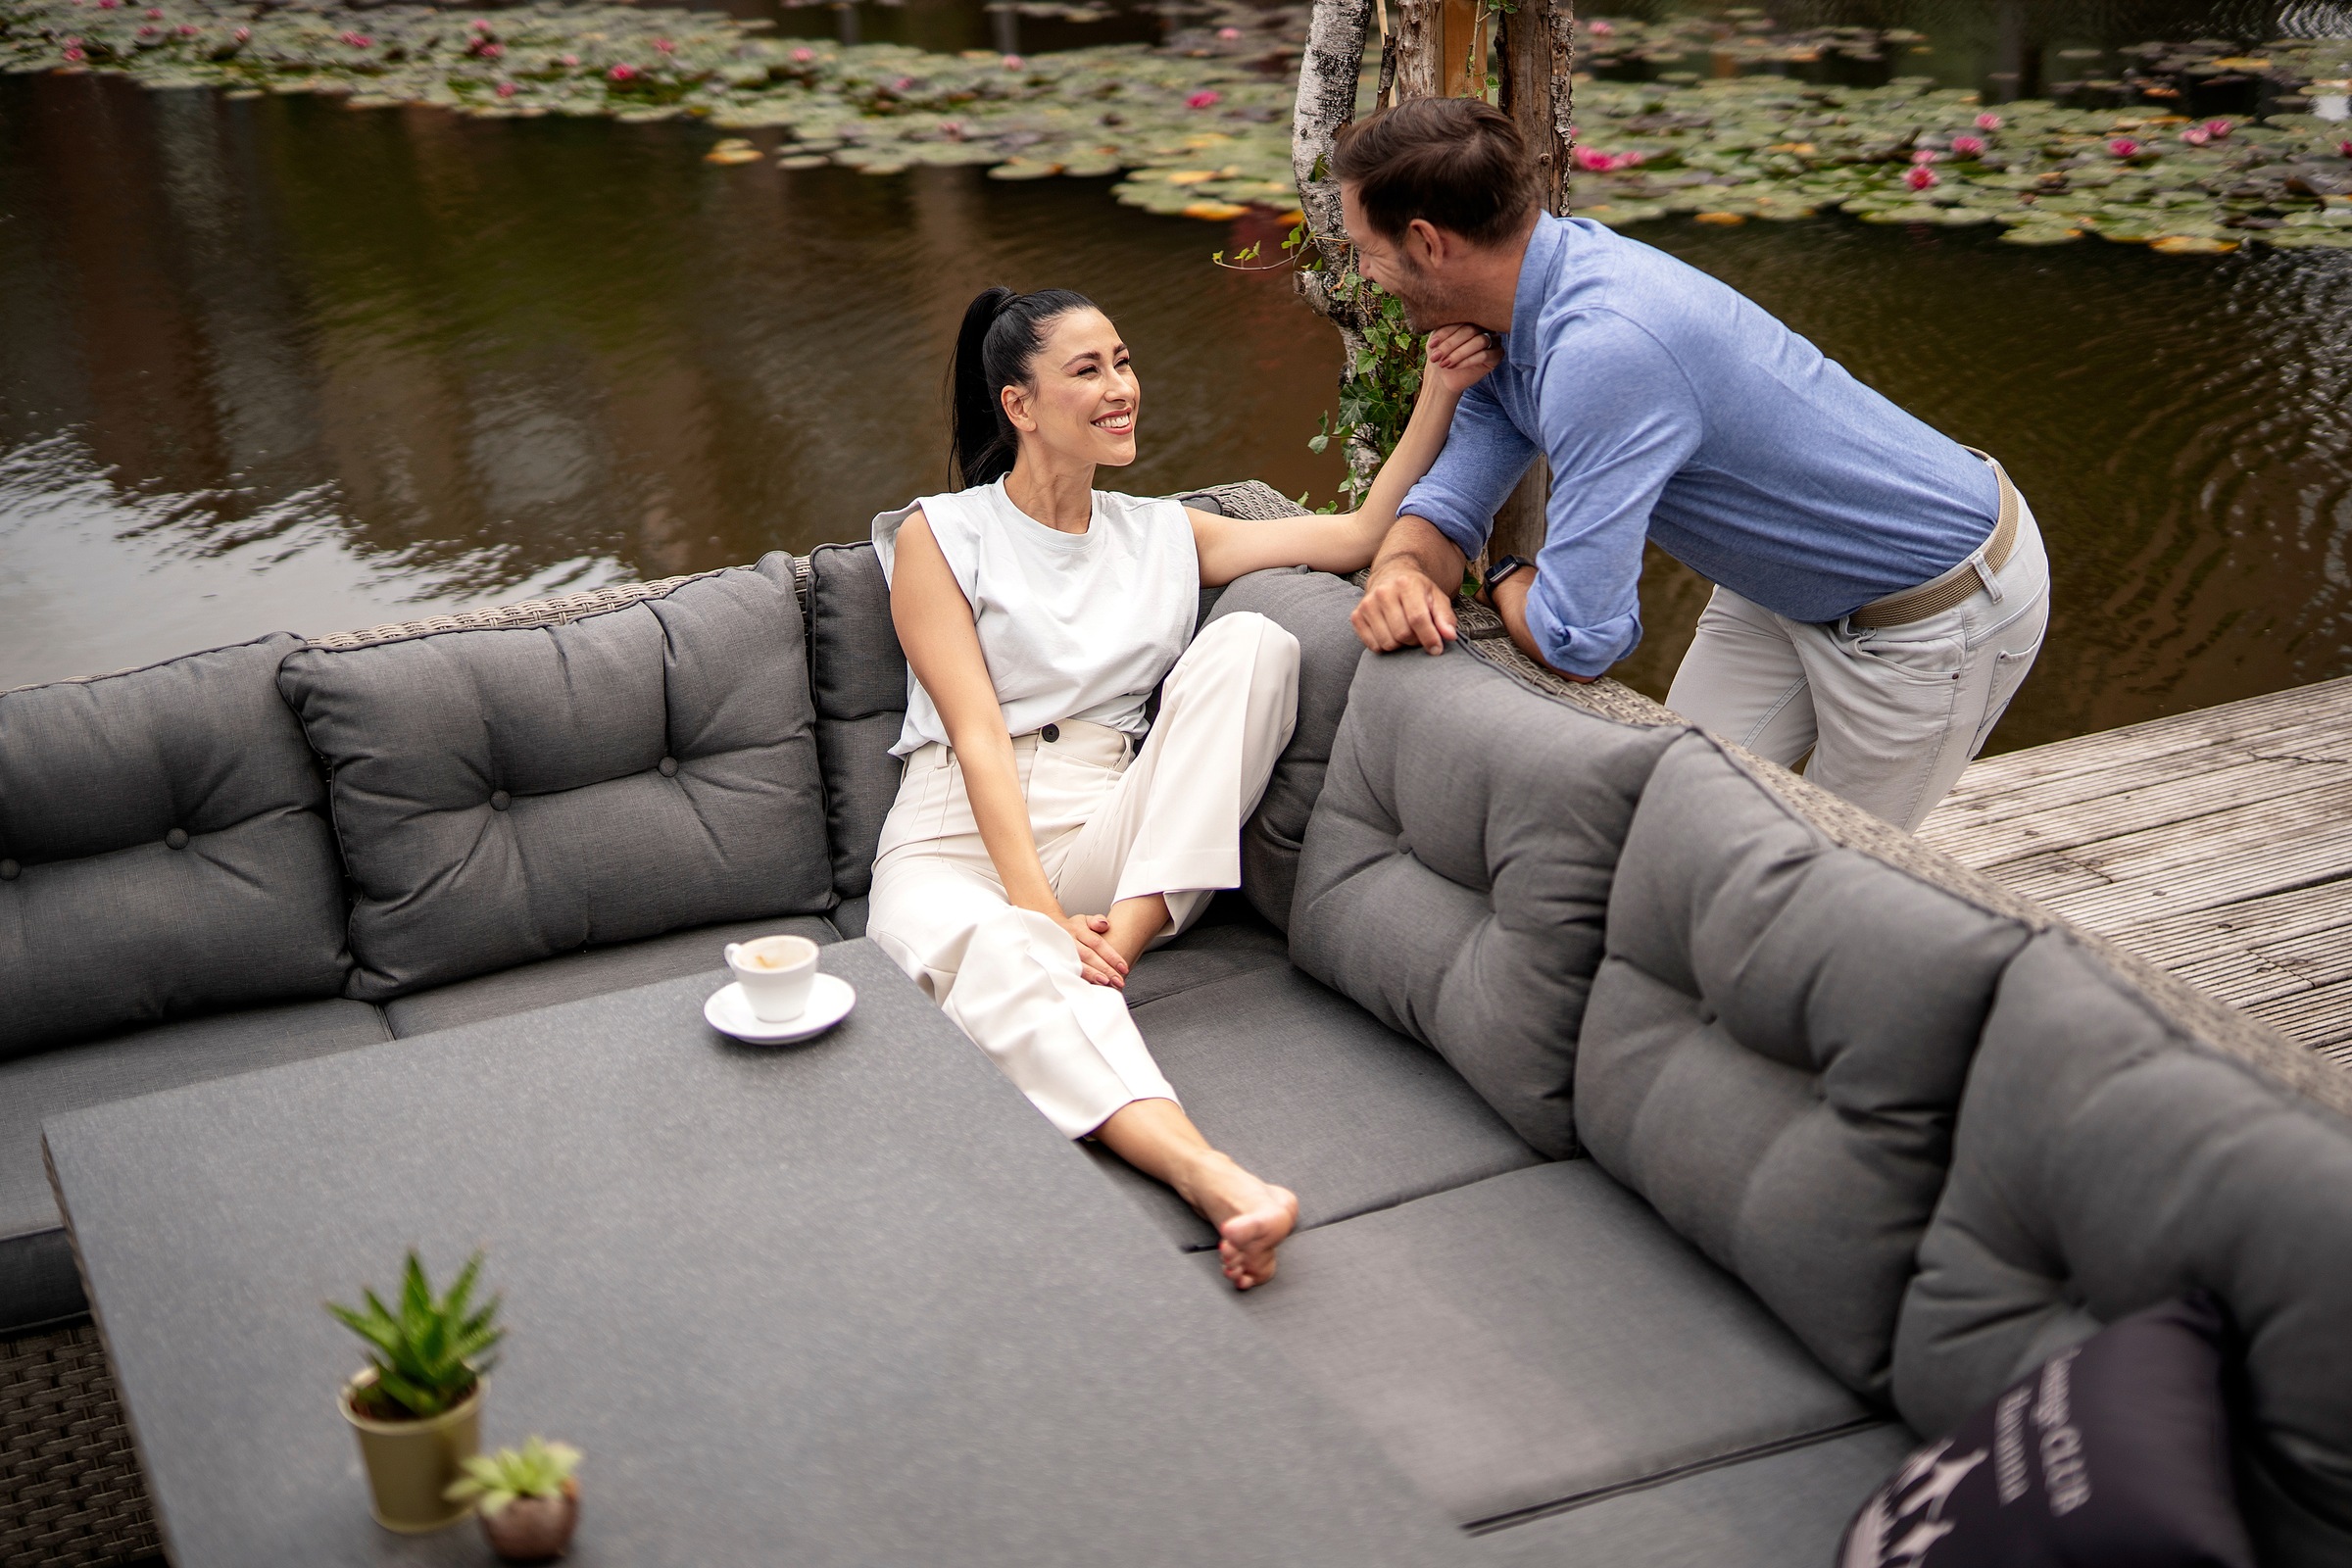 winza outdoor covers Gartenmöbel-Schutzhülle »Winza Outdoor Cover«, geeignet für Loungeset, 320x275x80 cm